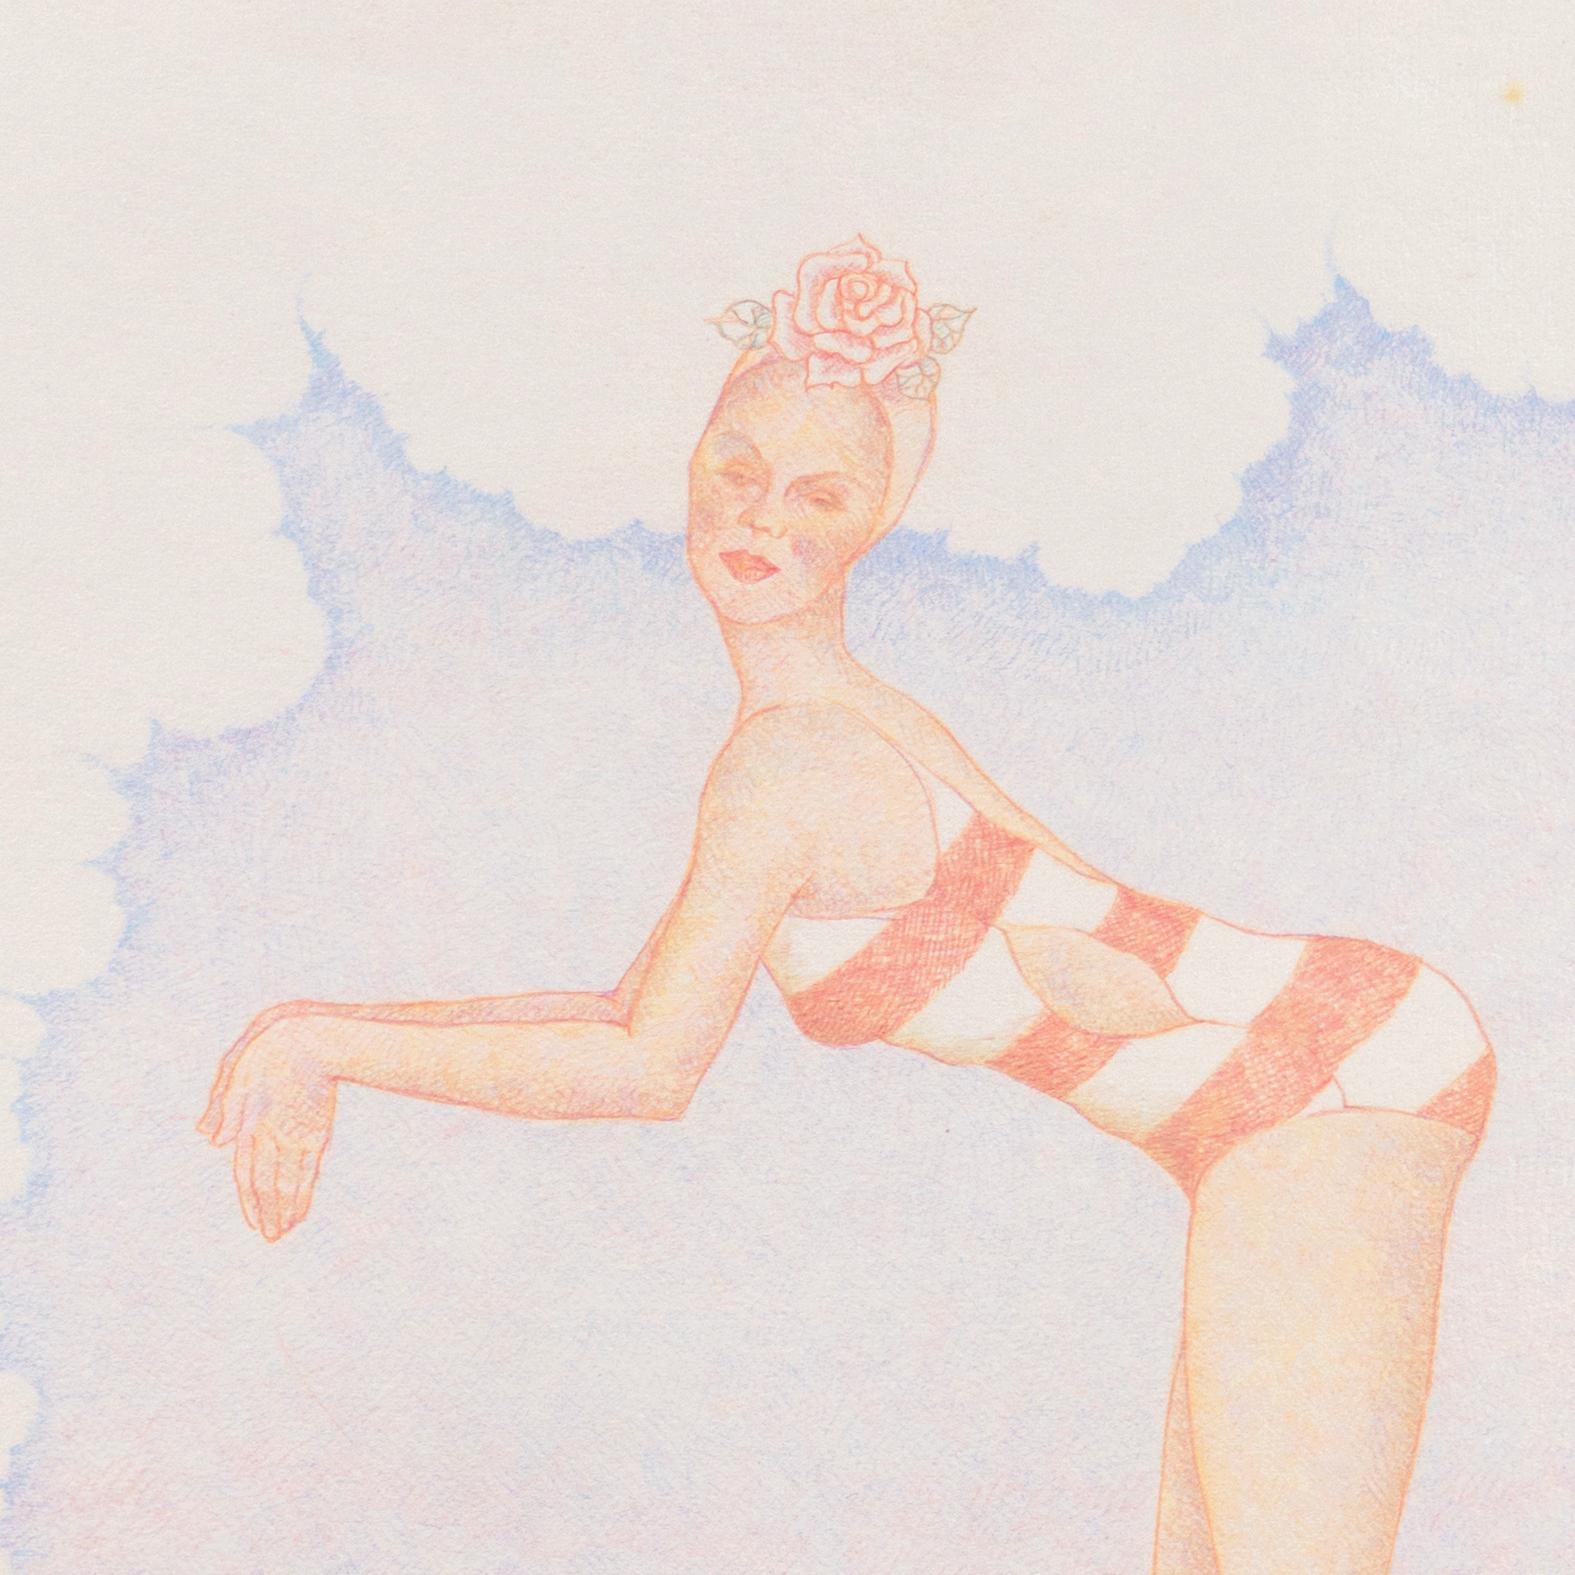 'U.S.S. Love', Swimming with Mermaids, Merman - Art by Roberta Loach